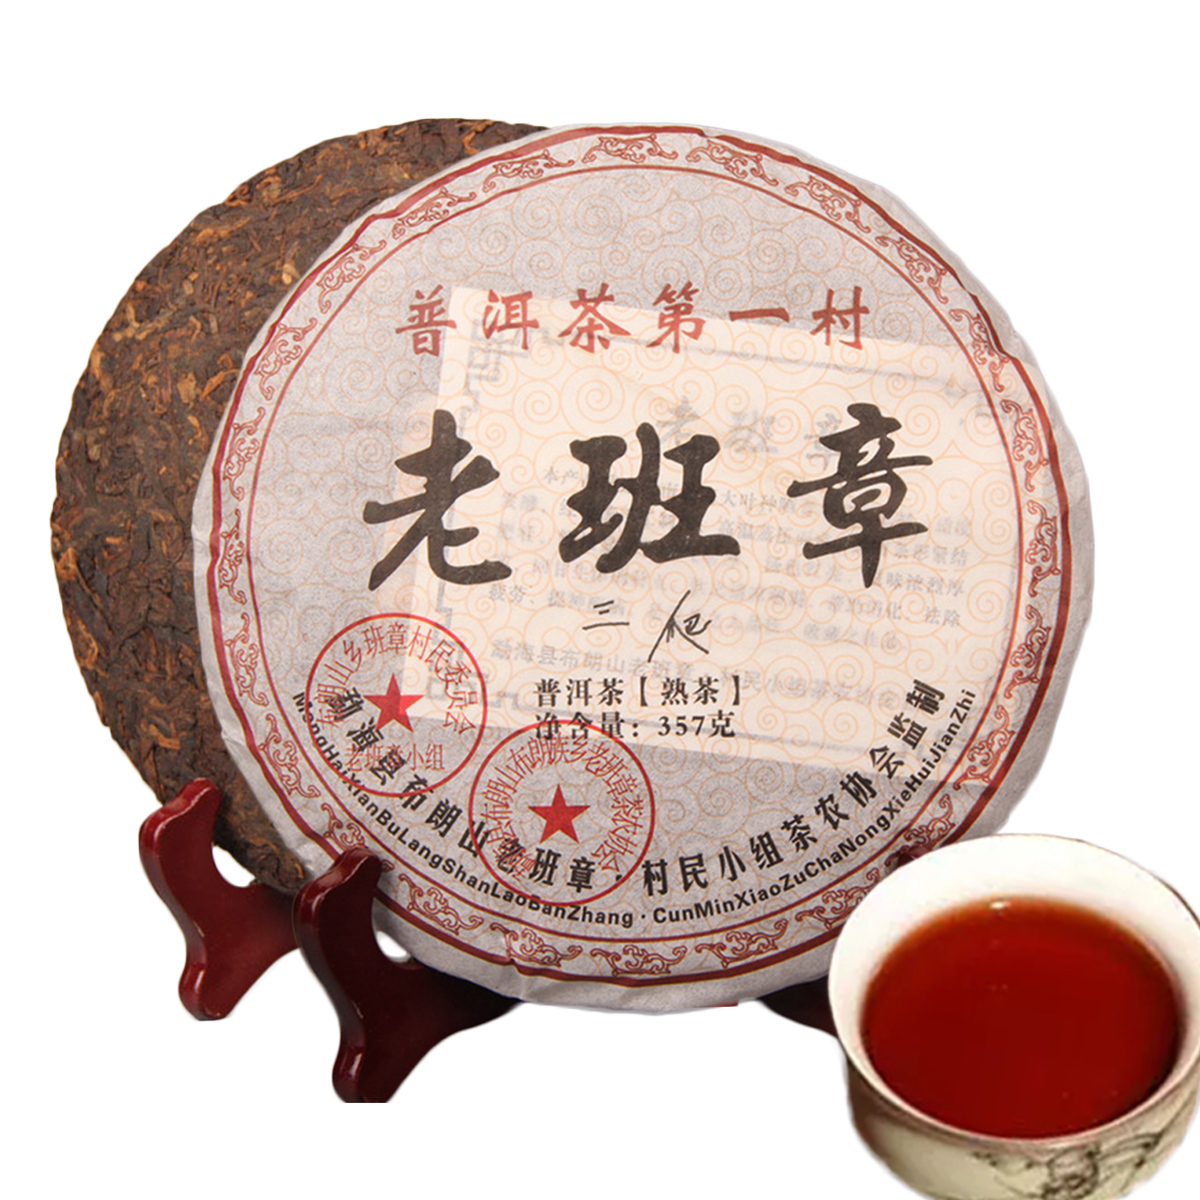 

357g Ripe Puer Tea Yunnan Old Banzhang Classic Puer Tea Organic Pu'er Old Tree Cooked Puer Natural Pu erh Black Puerh Tea Cake